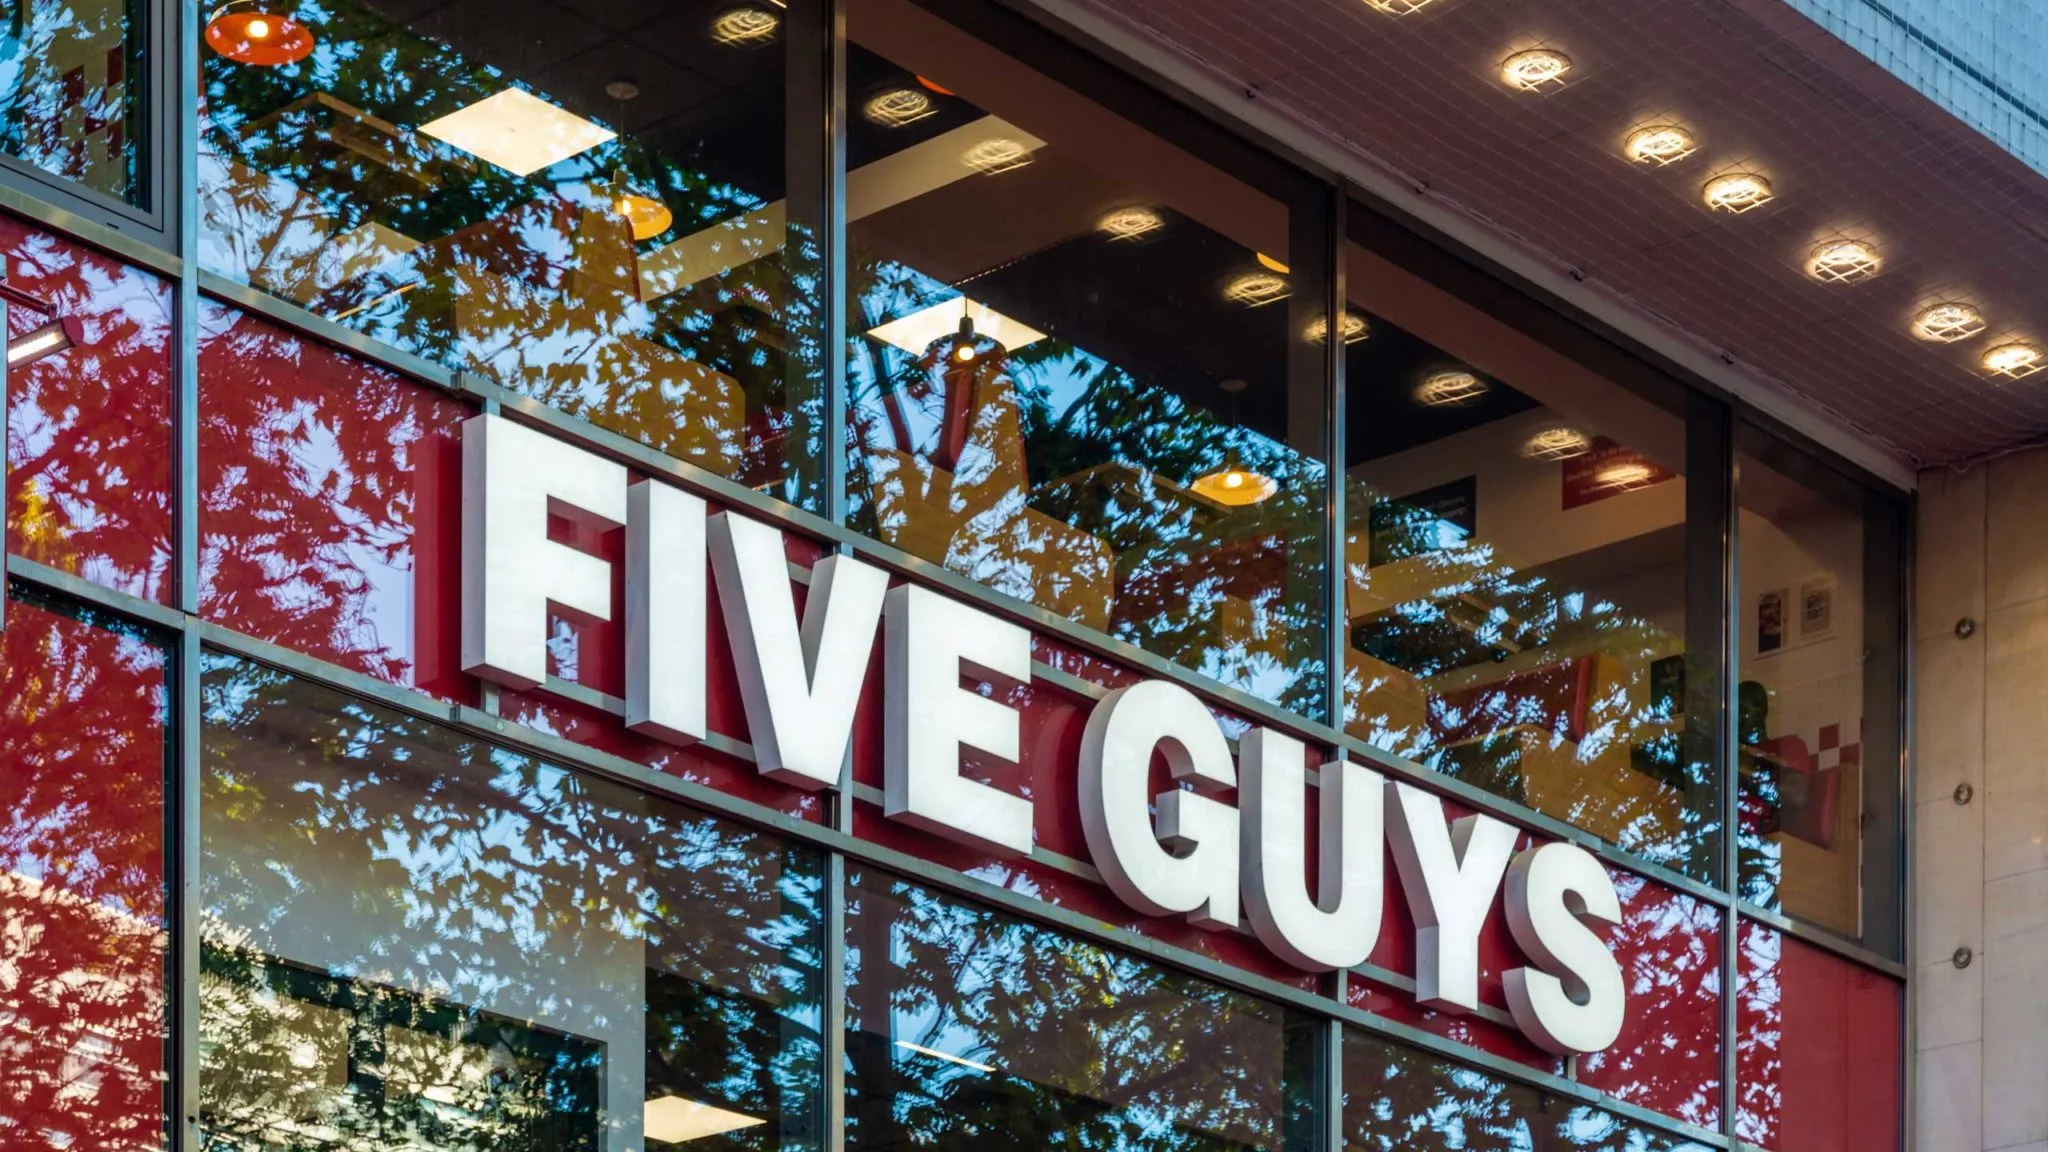 Five Guys signage on restaurant window